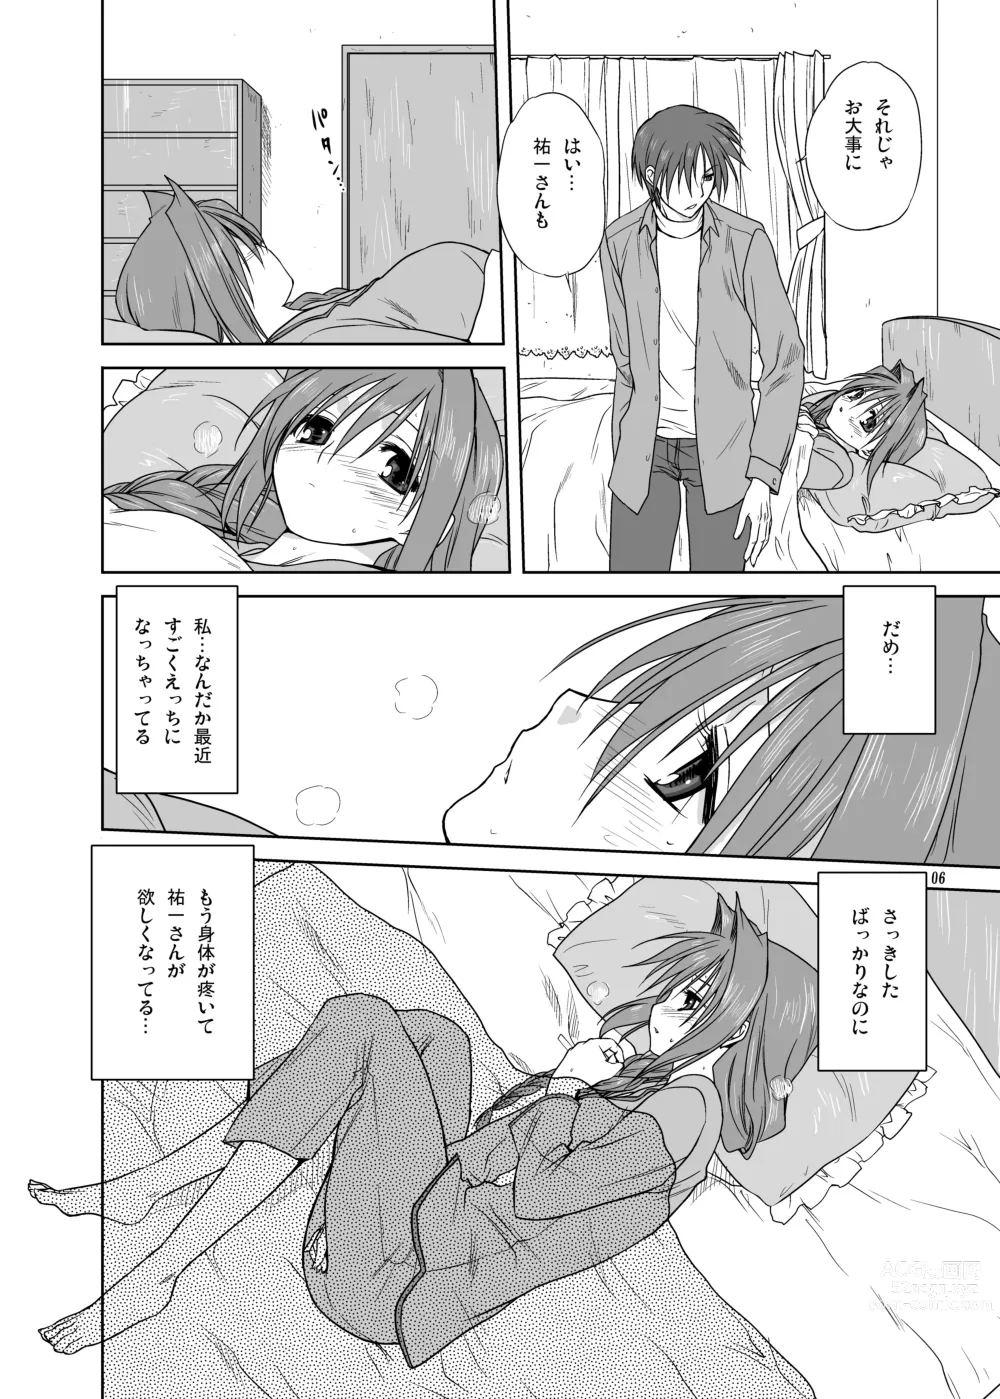 Page 5 of doujinshi Akiko-san to Issho 3